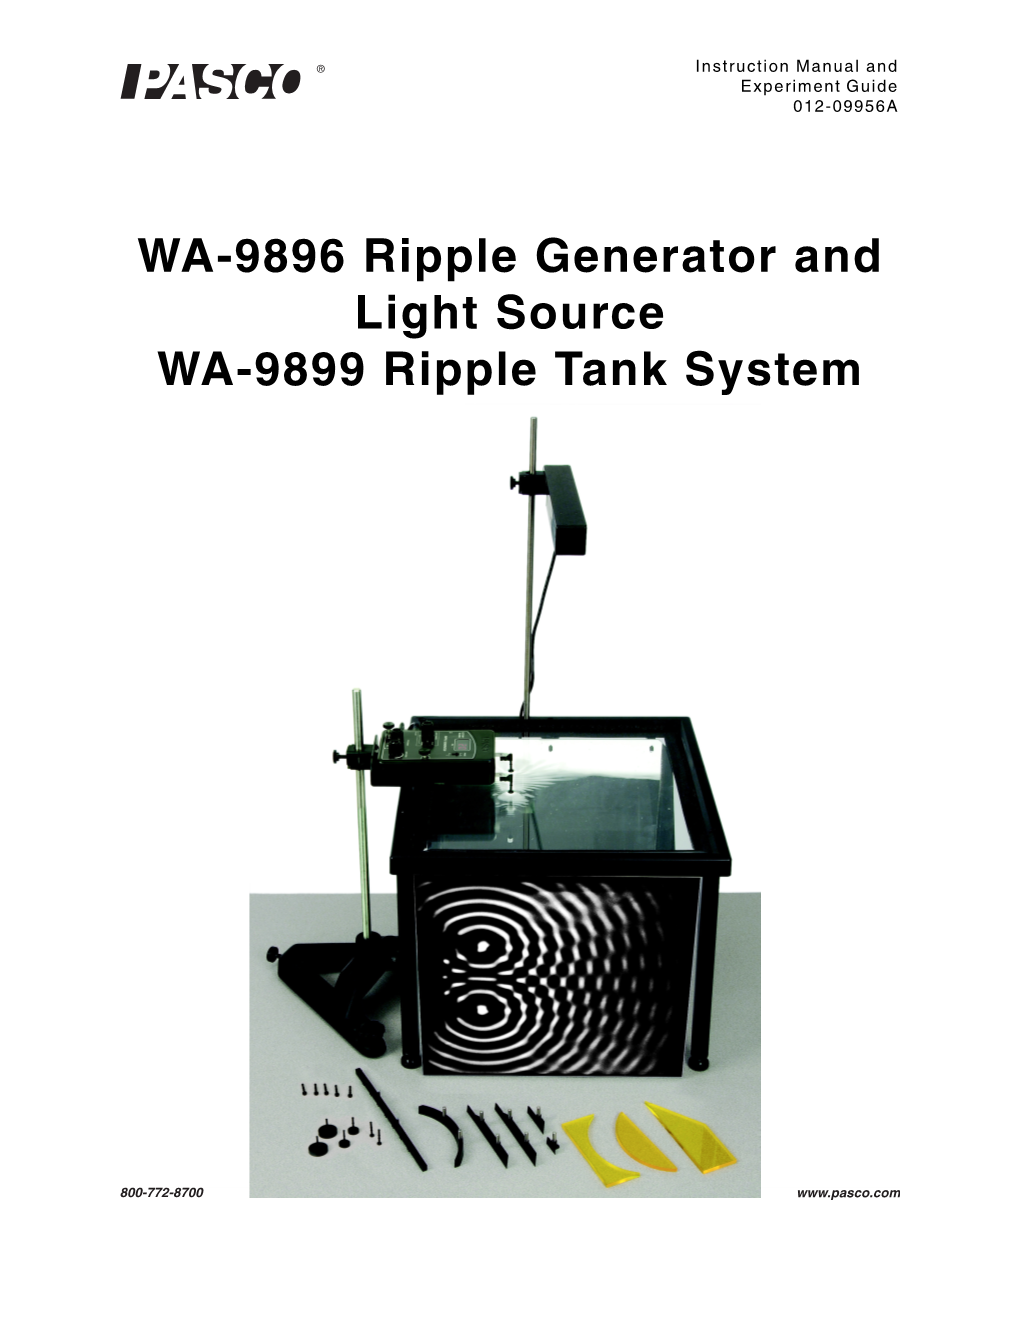 Ripple Generator/Tank System and Light Source